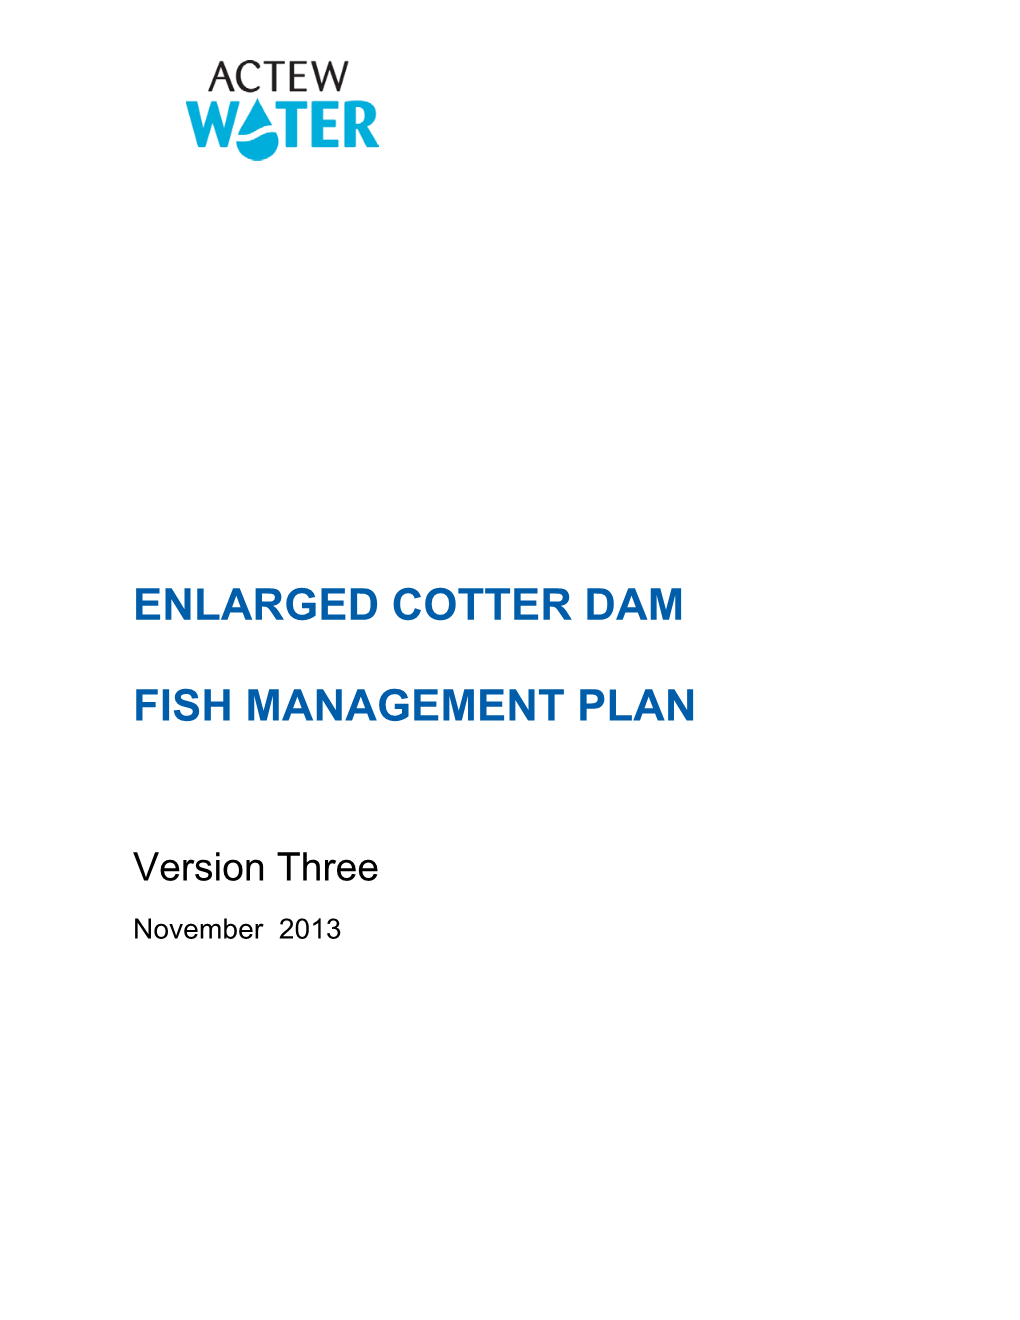 Enlarged Cotter Dam Fish Management Plan Version 3